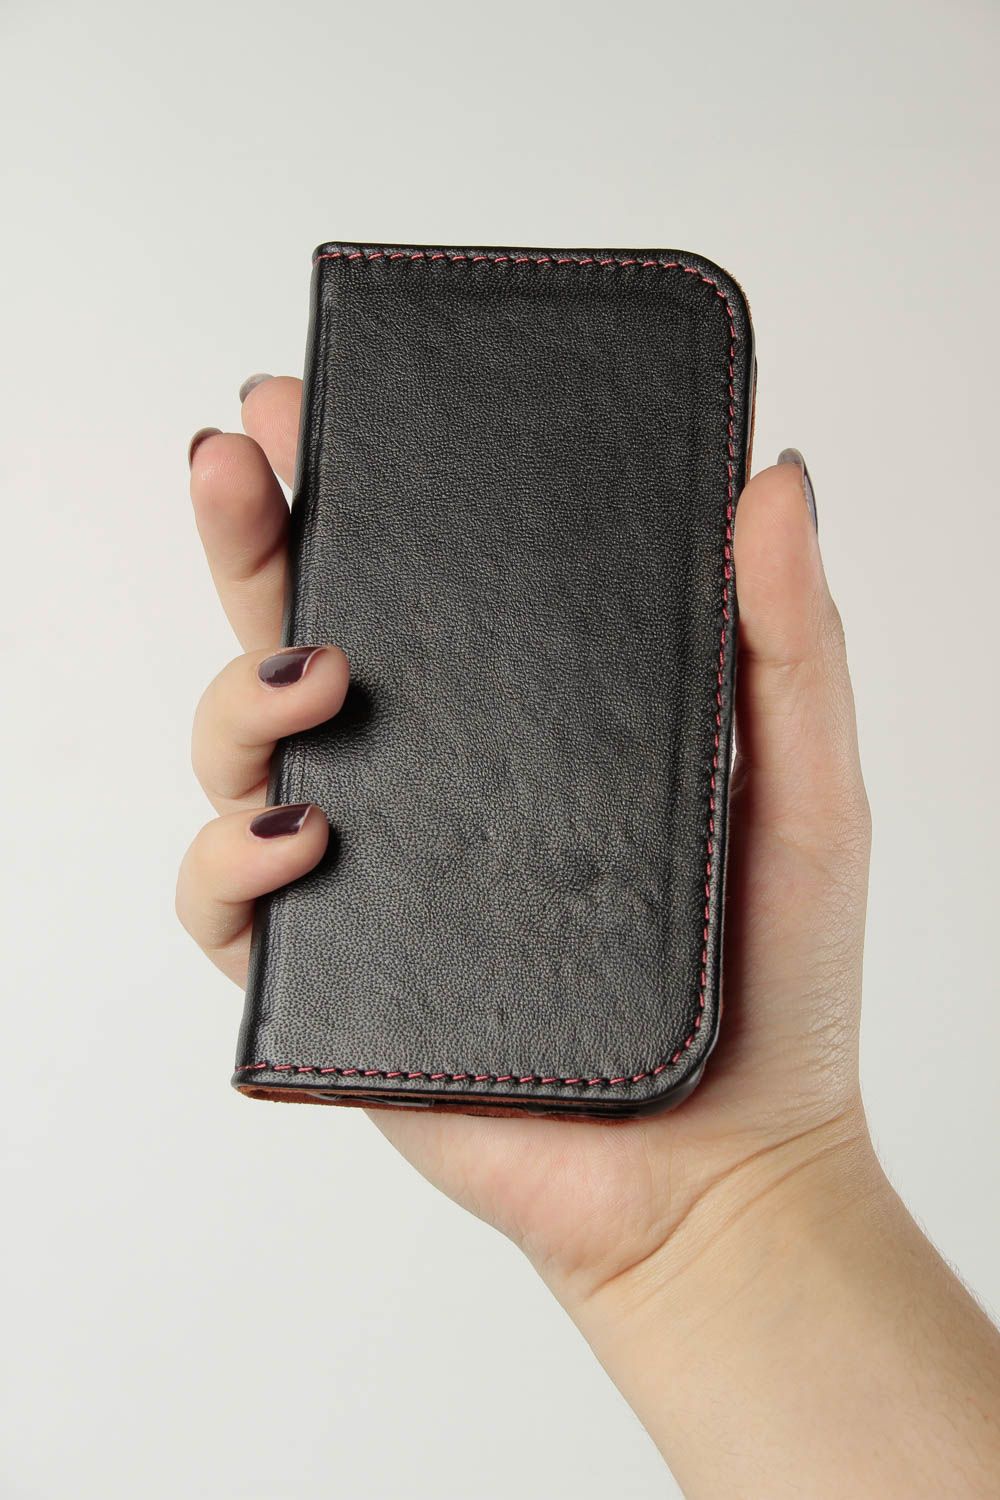 Stylish handmade leather phone case fashion accessories best gift ideas  photo 1